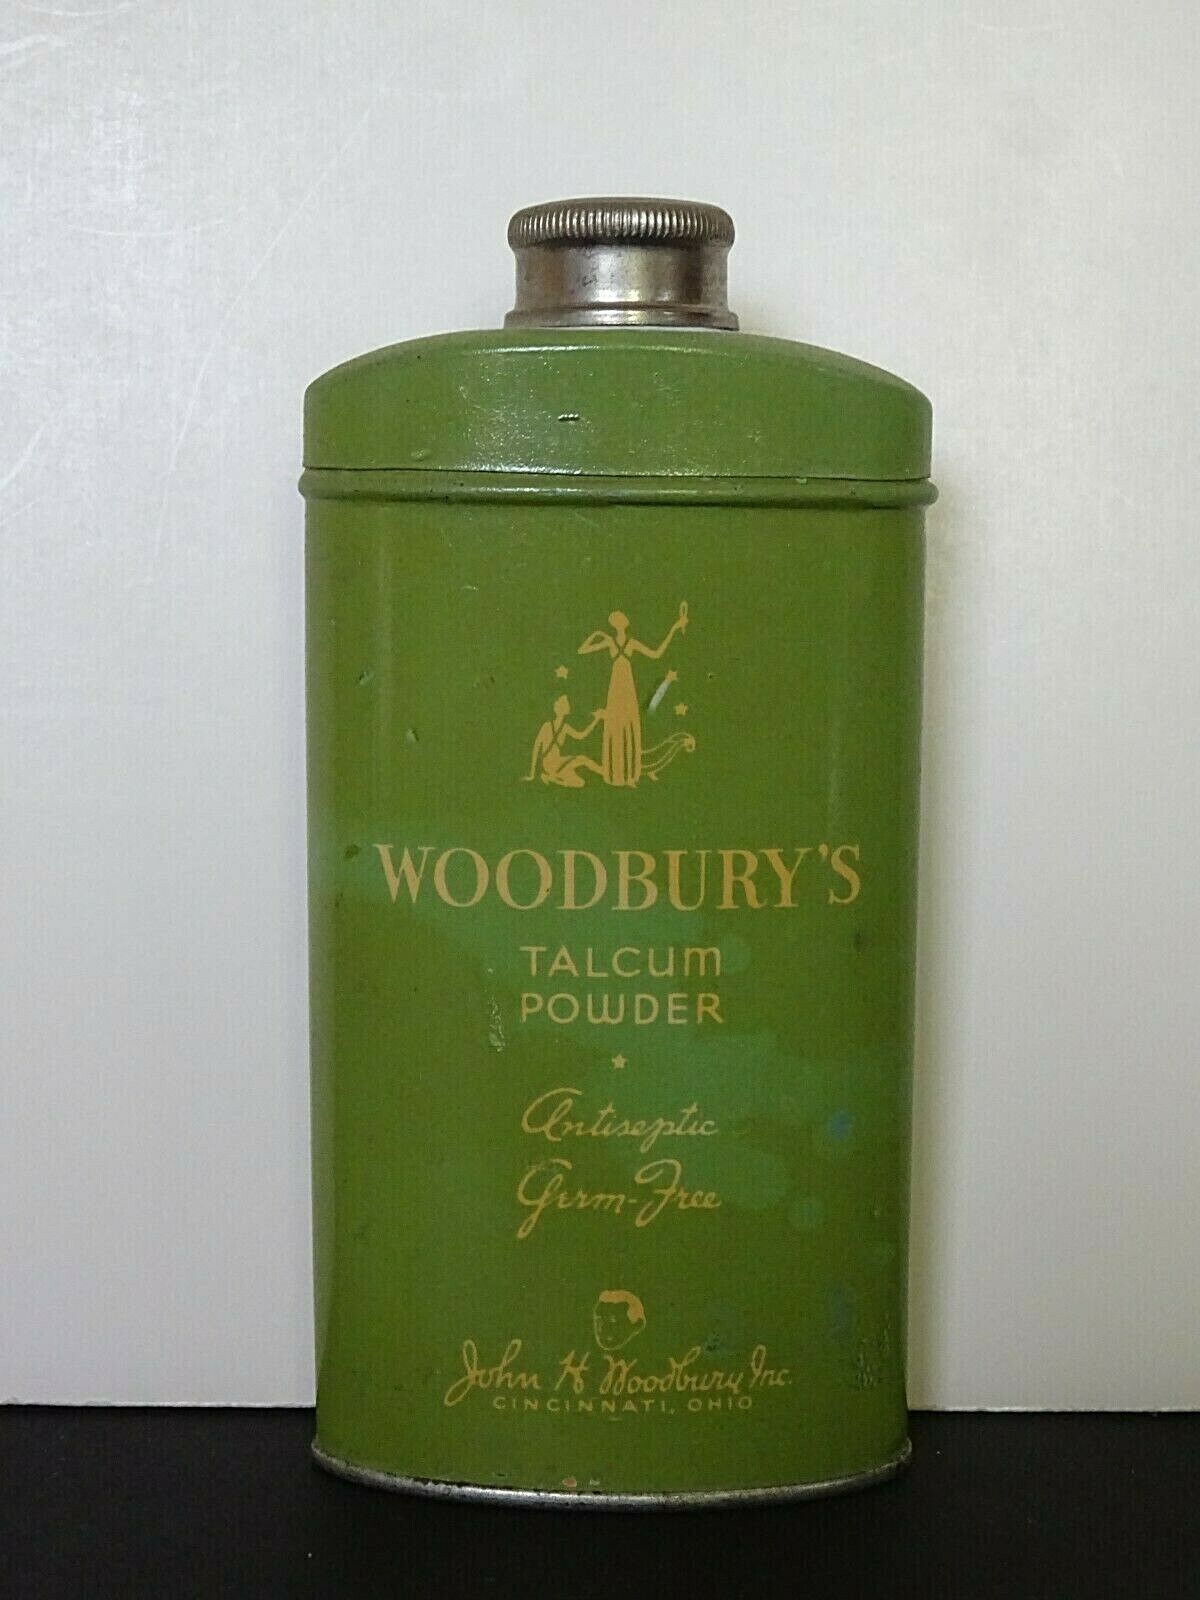 Vintage Woodbury’s Talcum Powder Tin "antiseptic Germ Free" John H. Woodbury In.